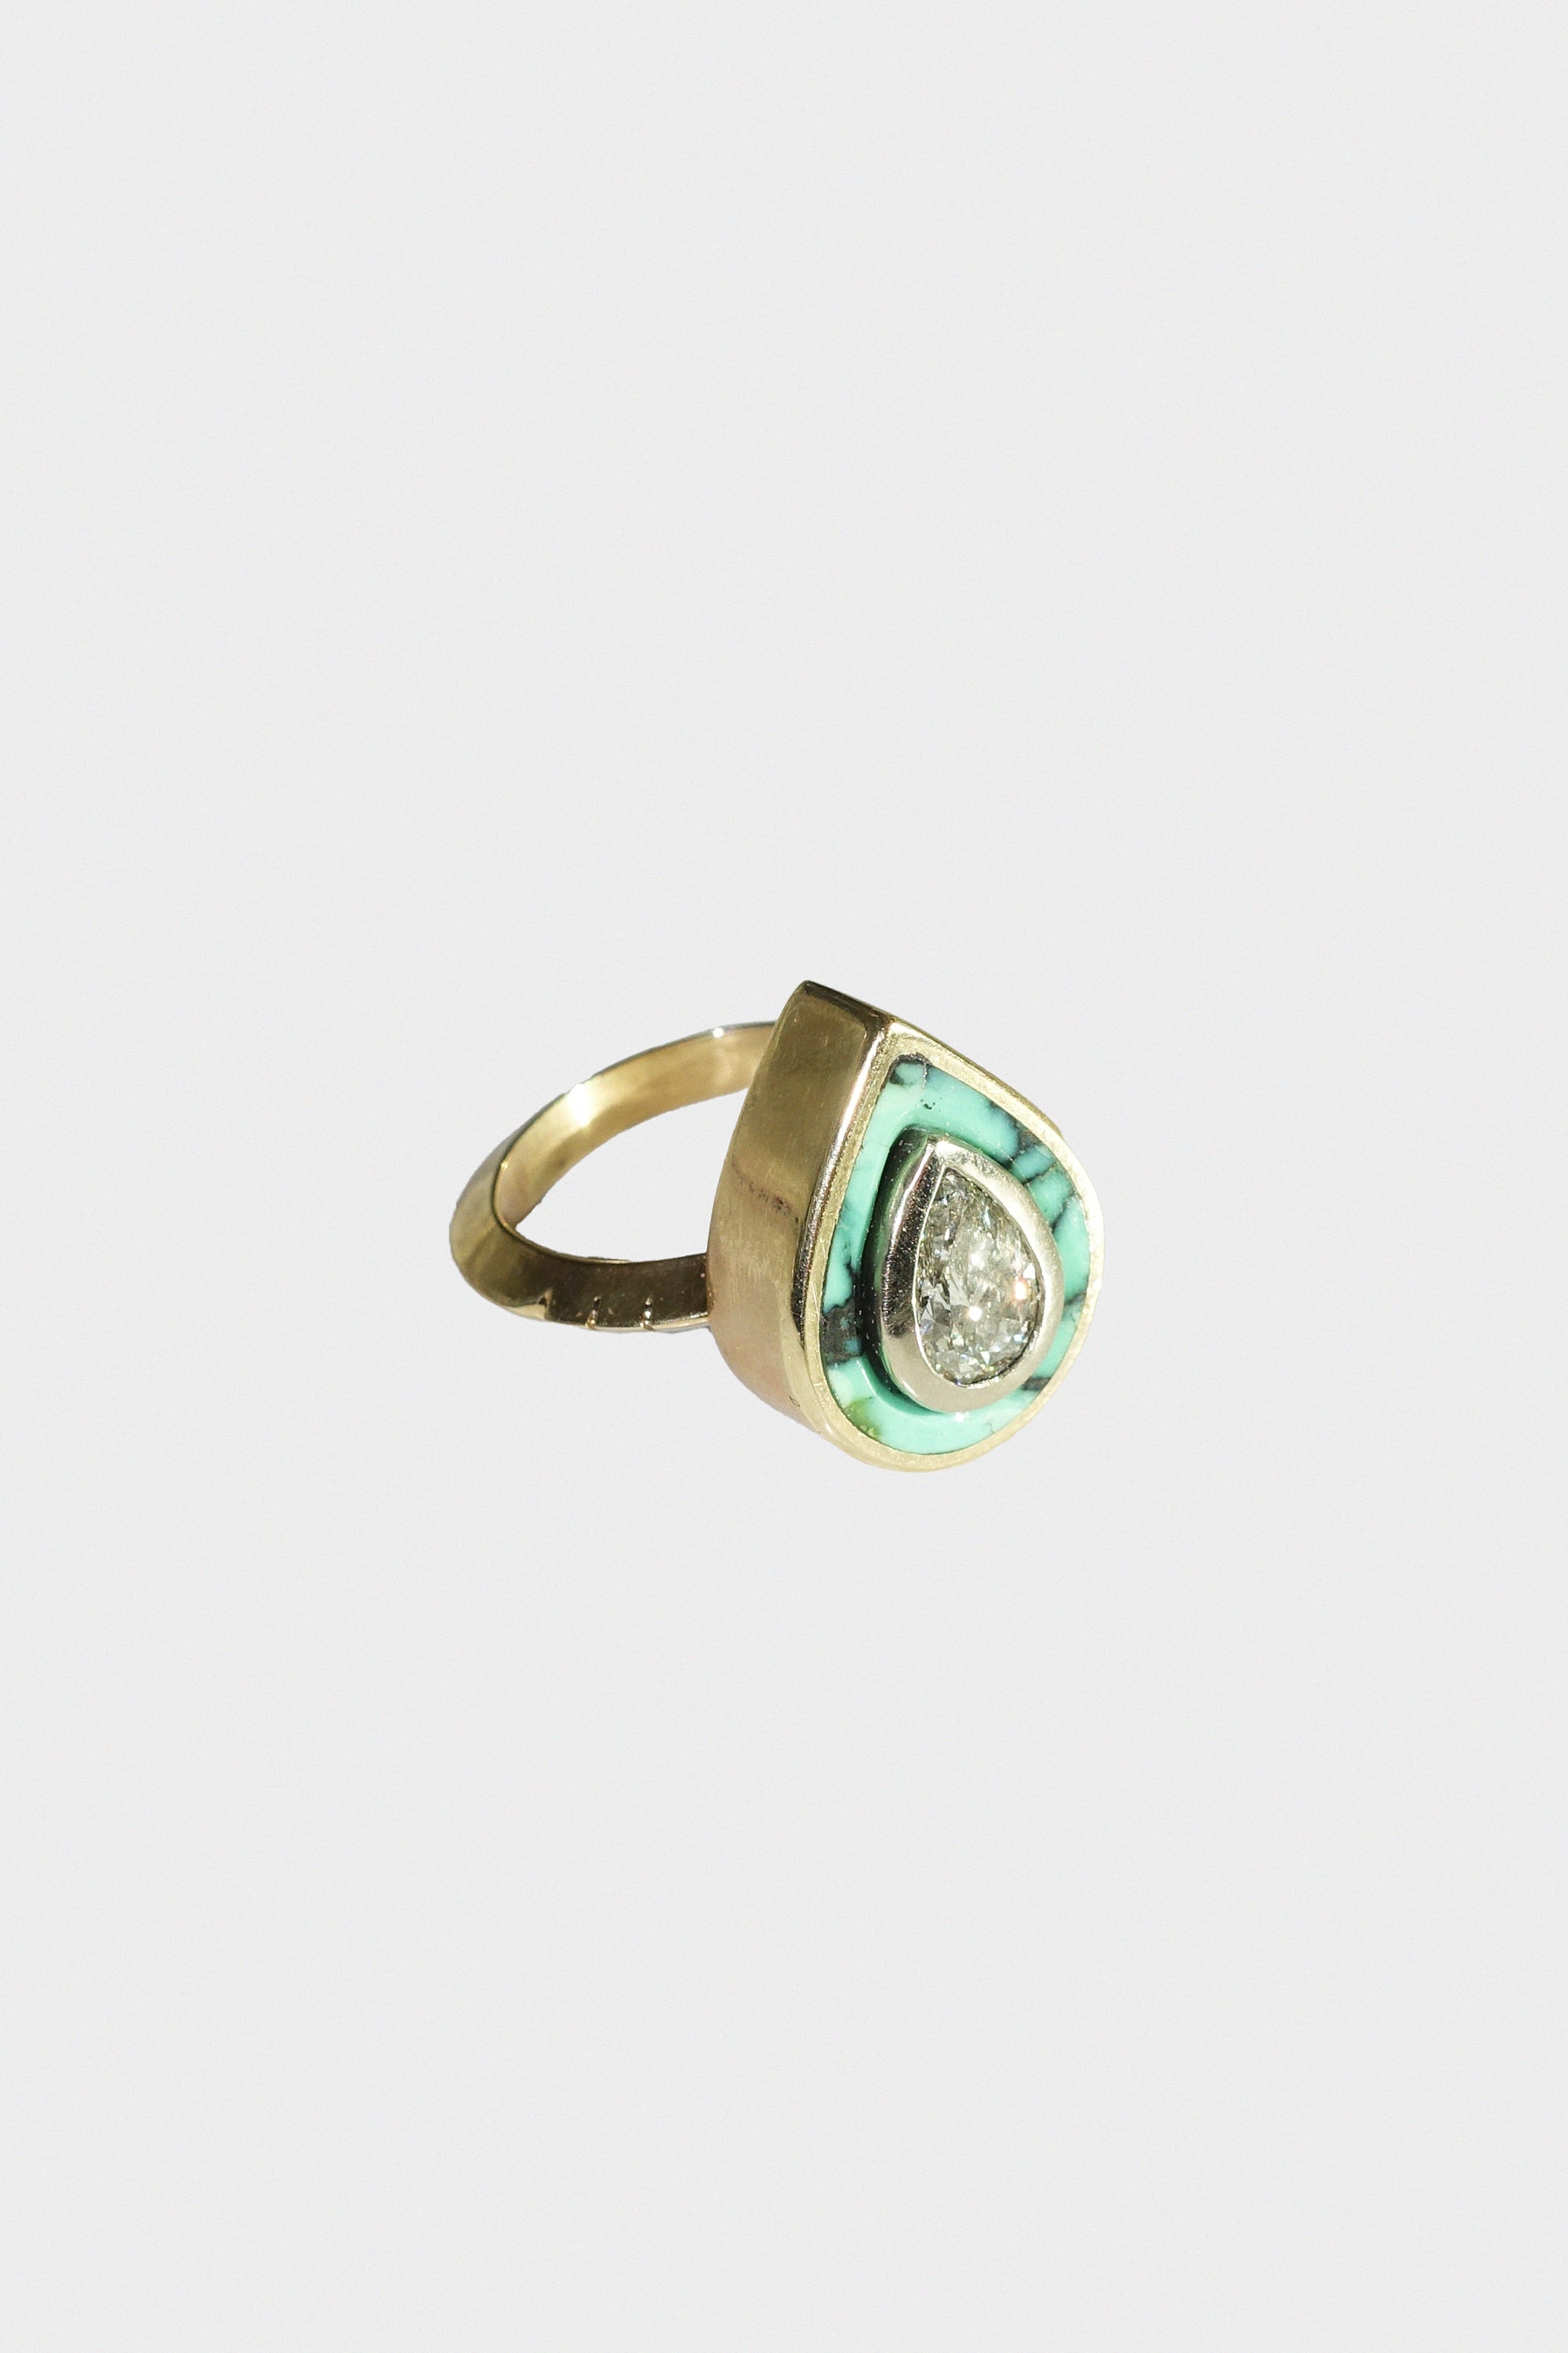 Teardrop Cerclen Diamond Ring in 14k Yellow Gold & Turquoise